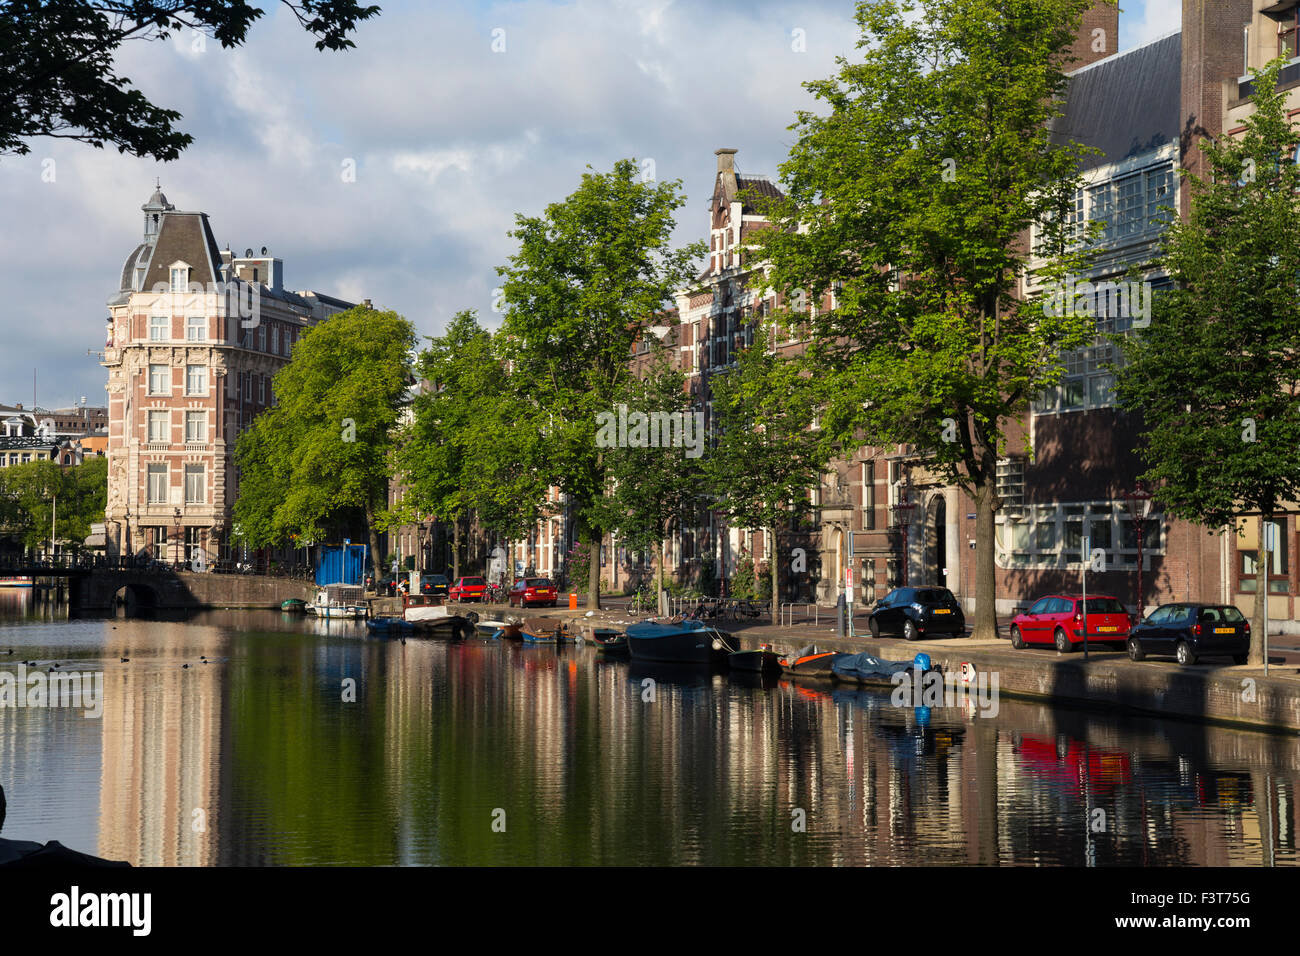 Kloveniersburgwal canal Amsterdam Stock Photo